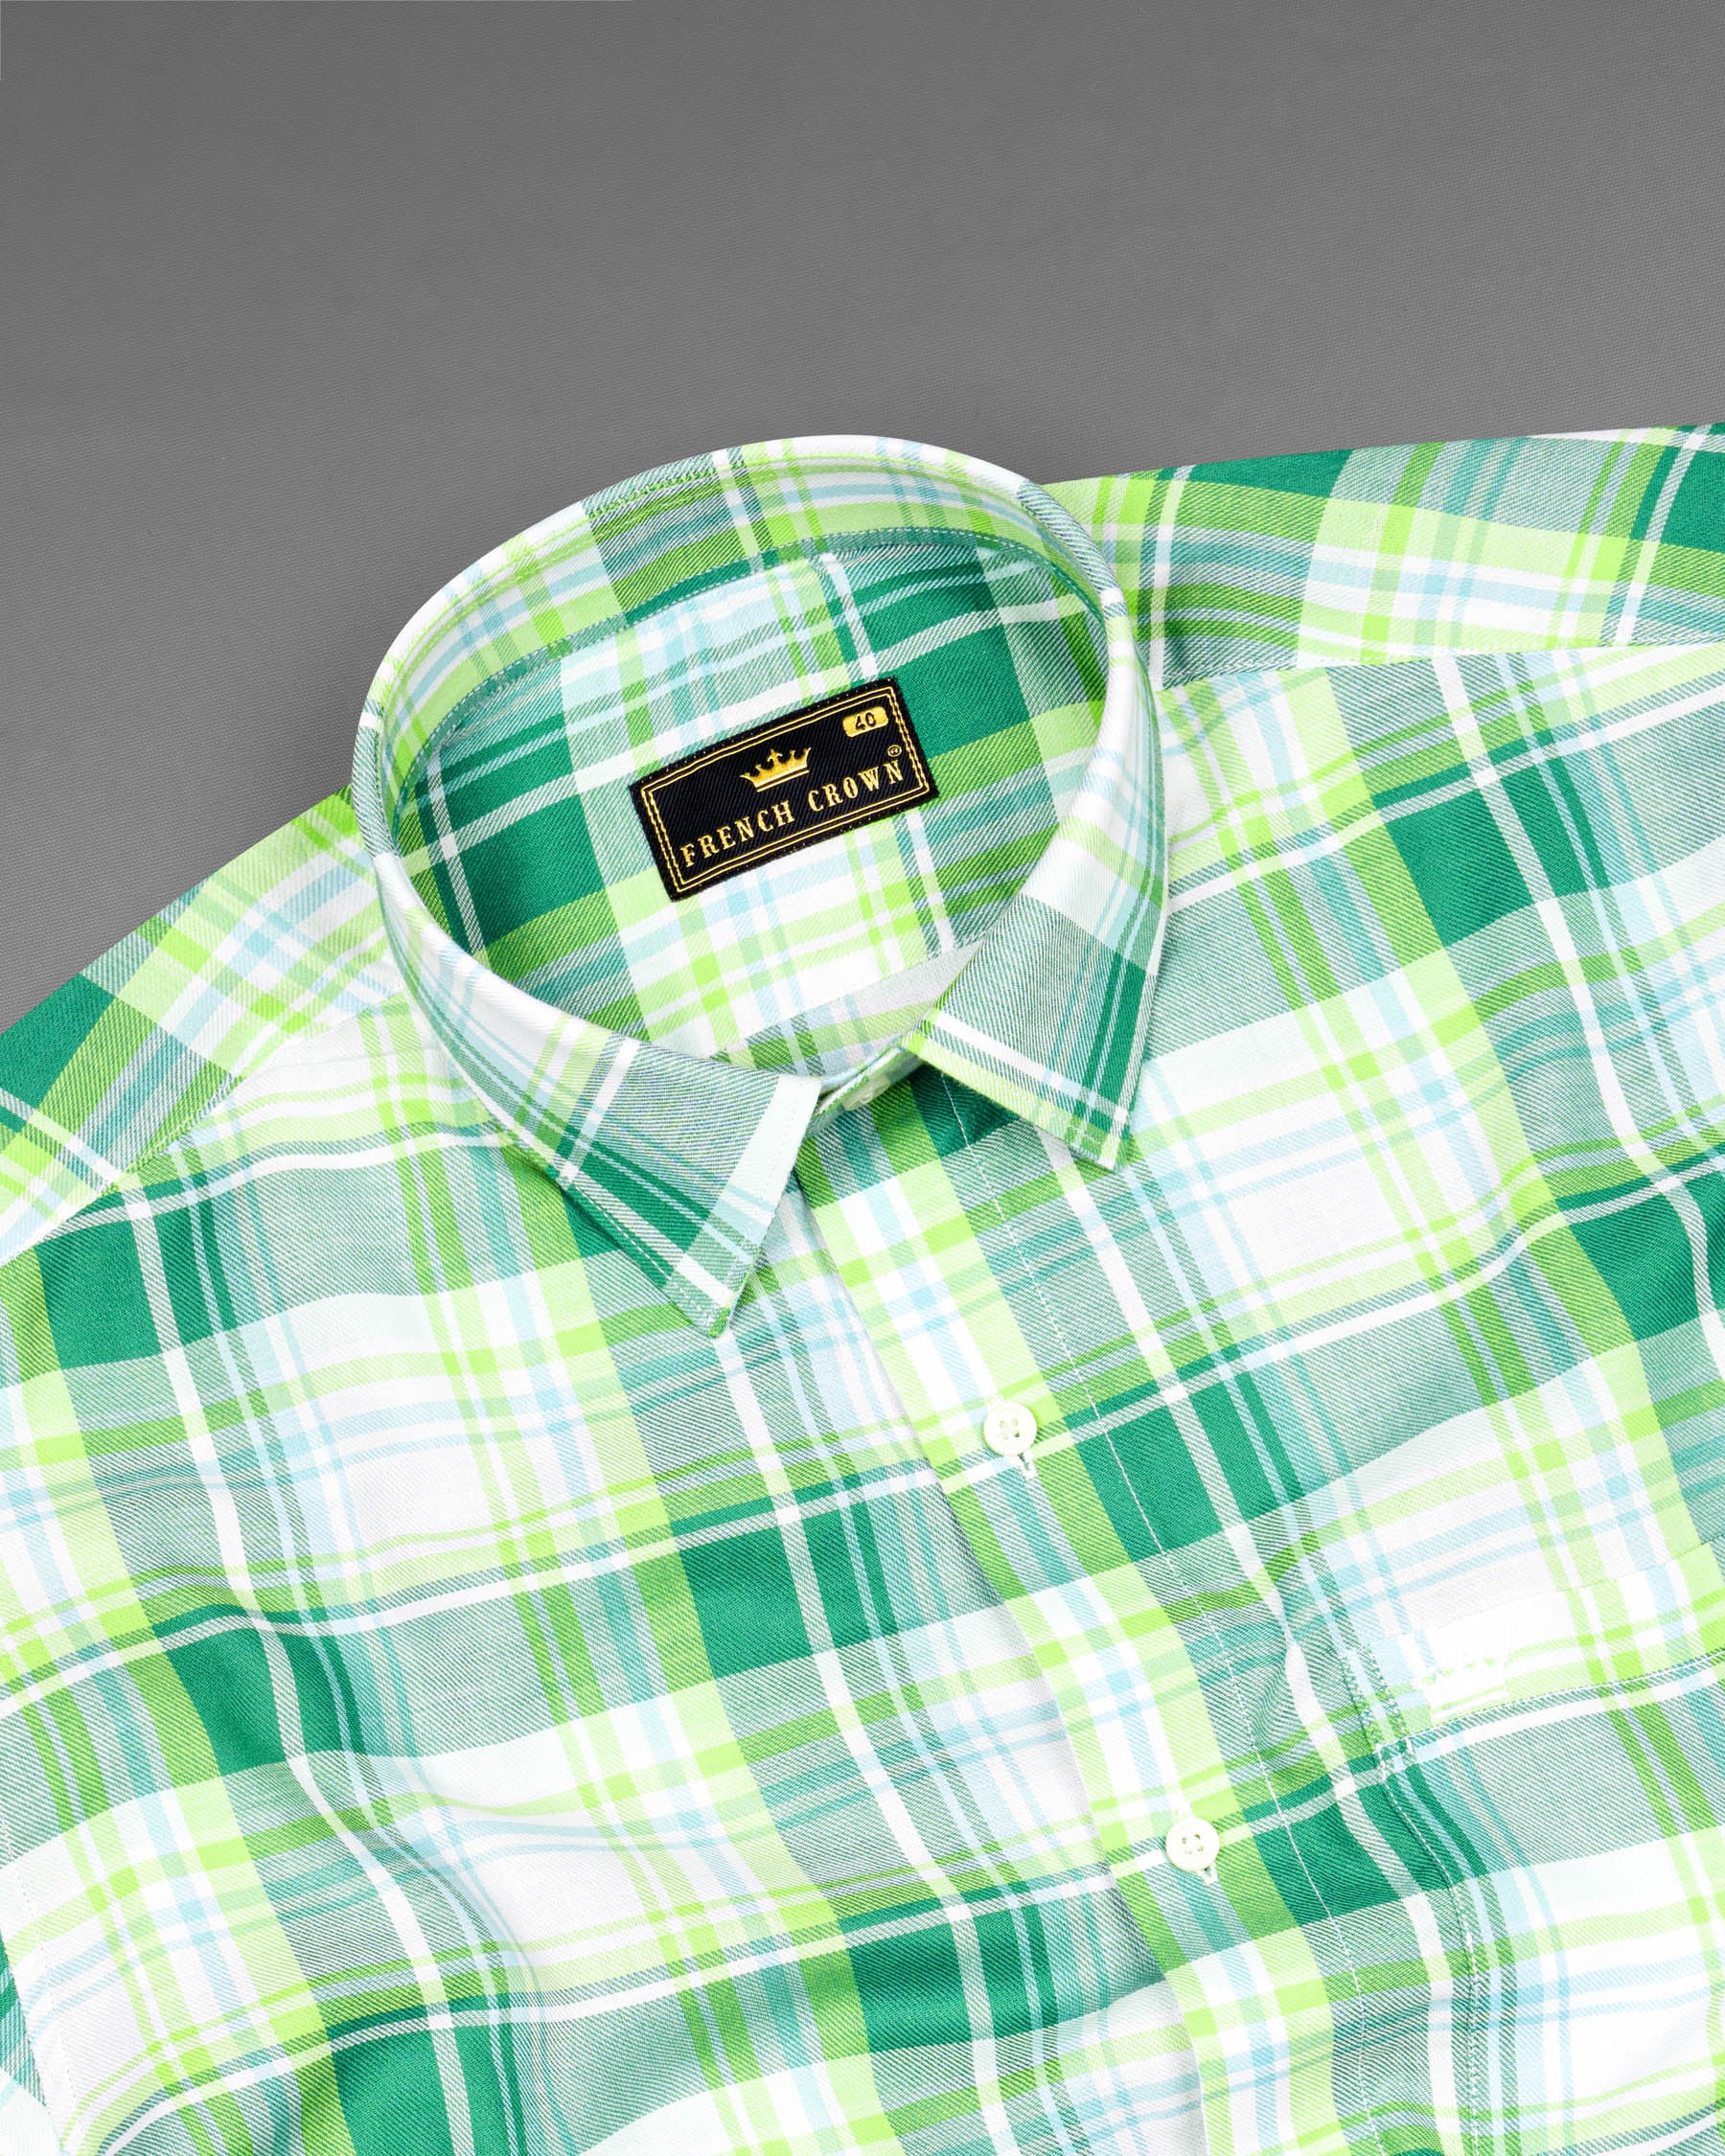 Eucalyptus Green and Light Sage Green Twill Plaid Premium Cotton Shirt